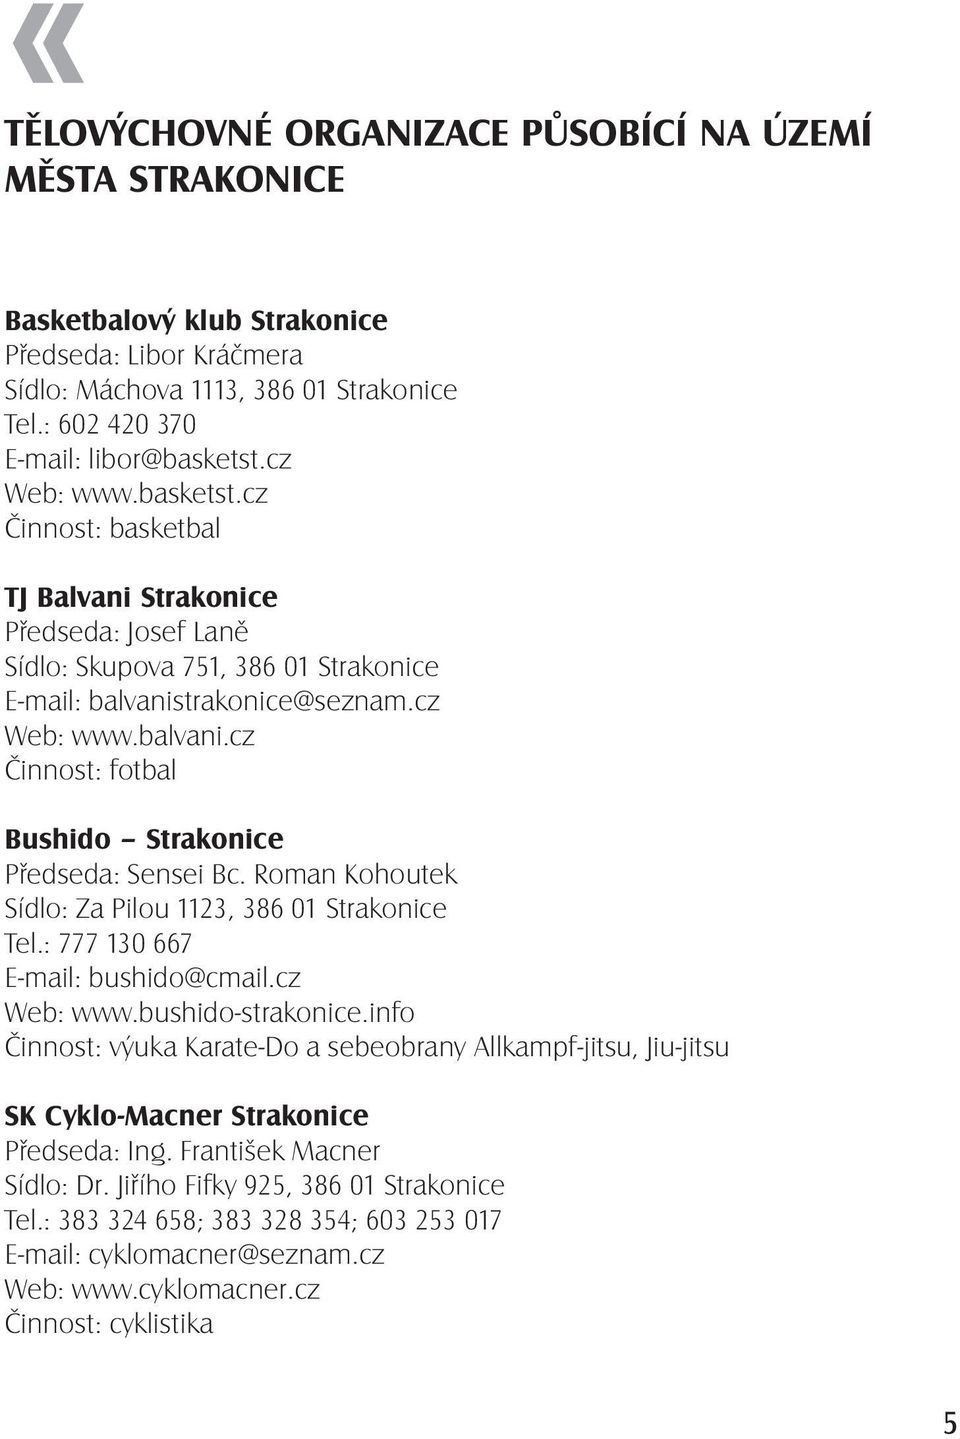 Roman Kohoutek Sídlo: Za Pilou 1123, 386 01 Strakonice Tel.: 777 130 667 E-mail: bushido@cmail.cz Web: www.bushido-strakonice.